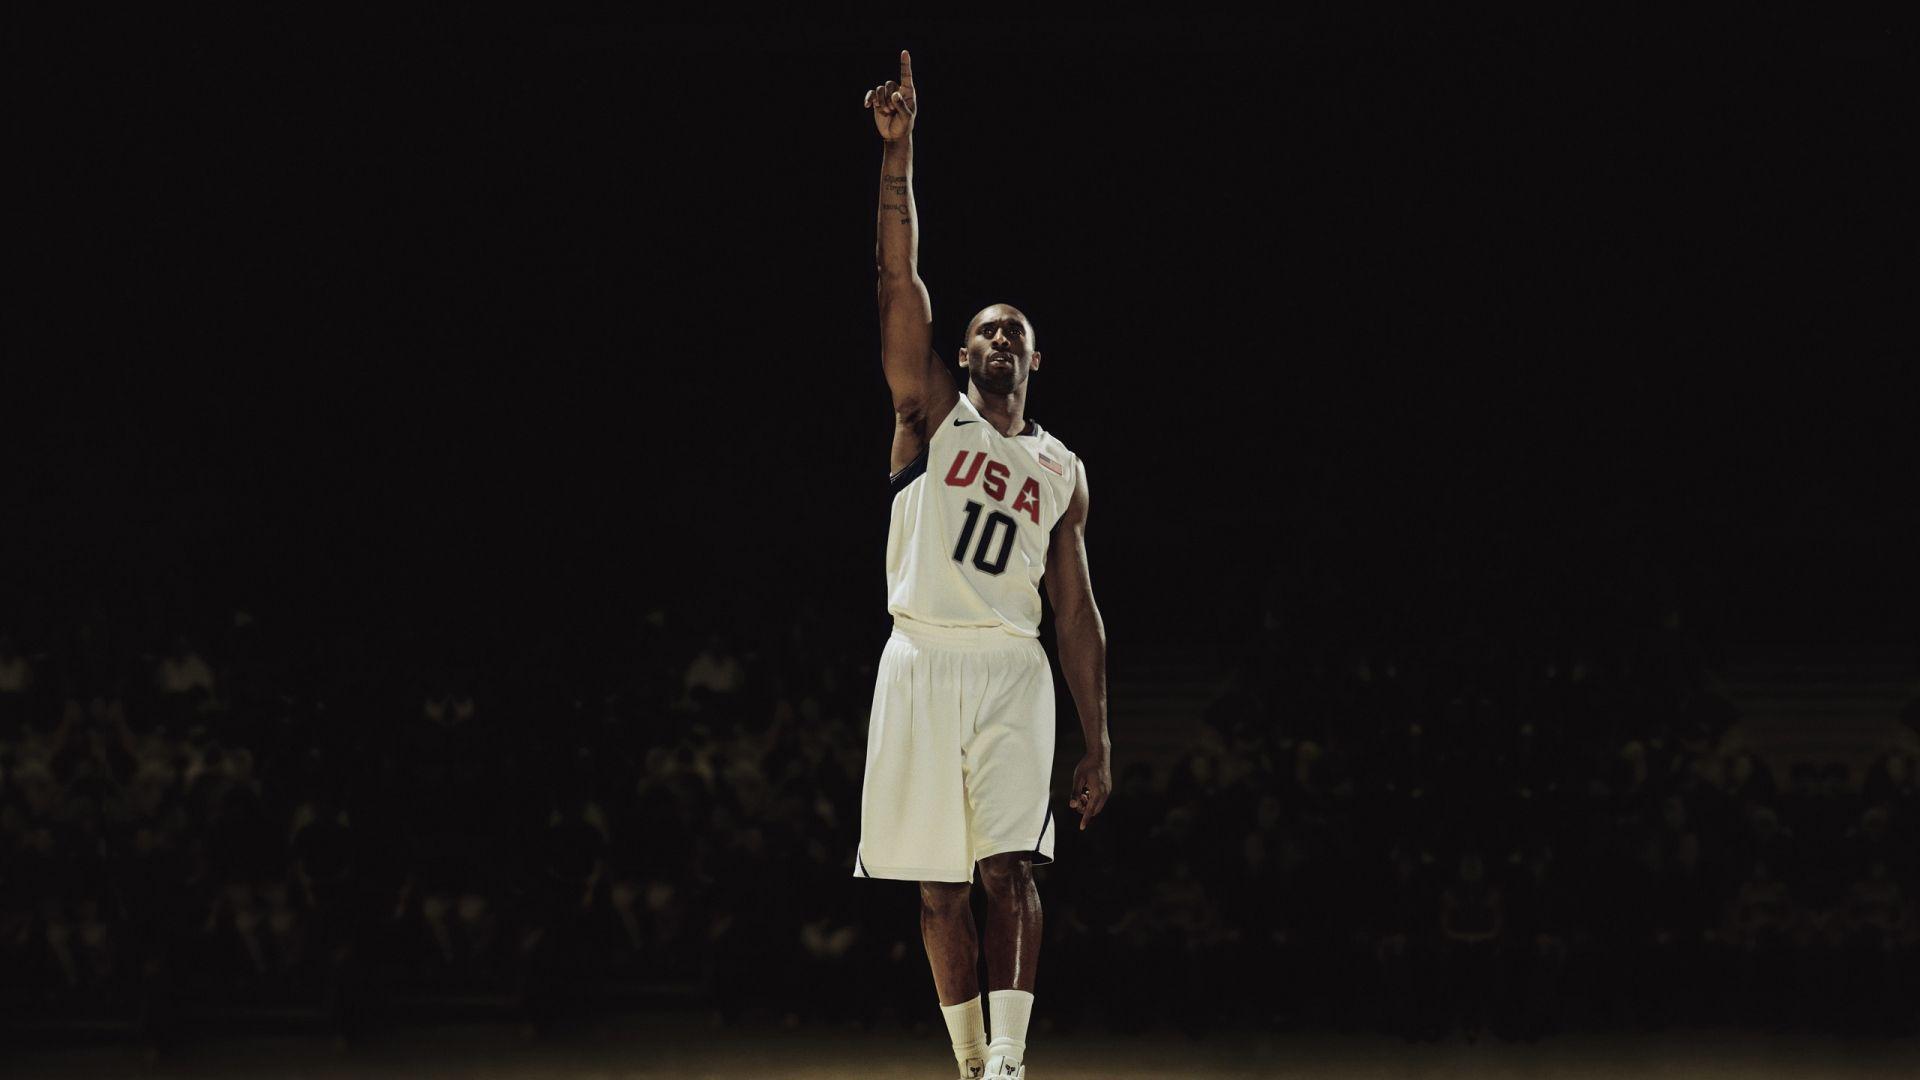 Kobe Bryant Basketball Player USA Team